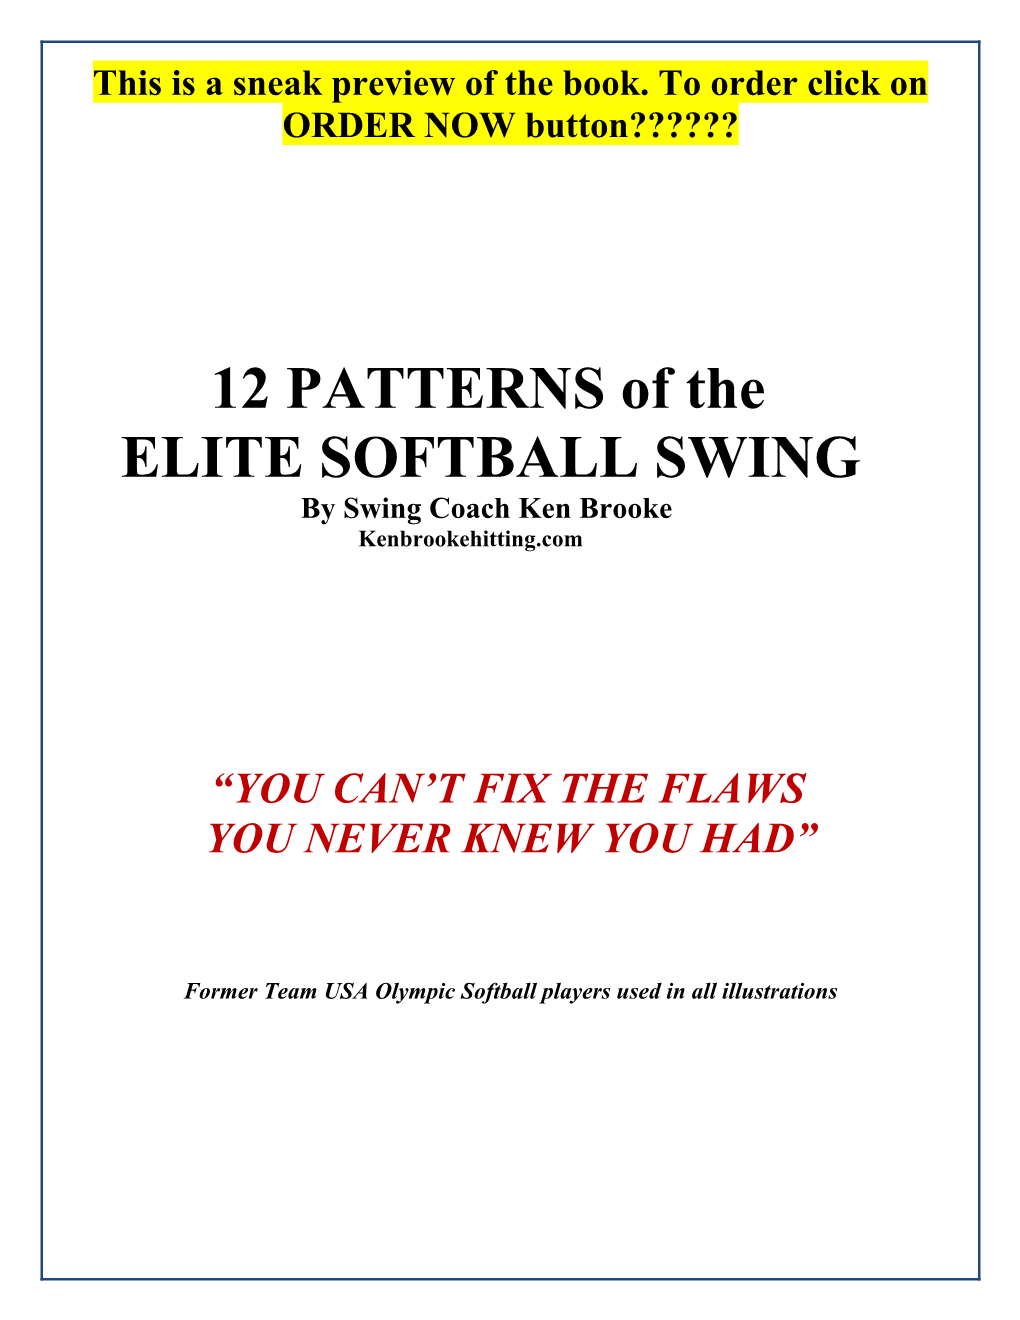 12 PATTERNS of the ELITE SOFTBALL SWING by Swing Coach Ken Brooke Kenbrookehitting.Com